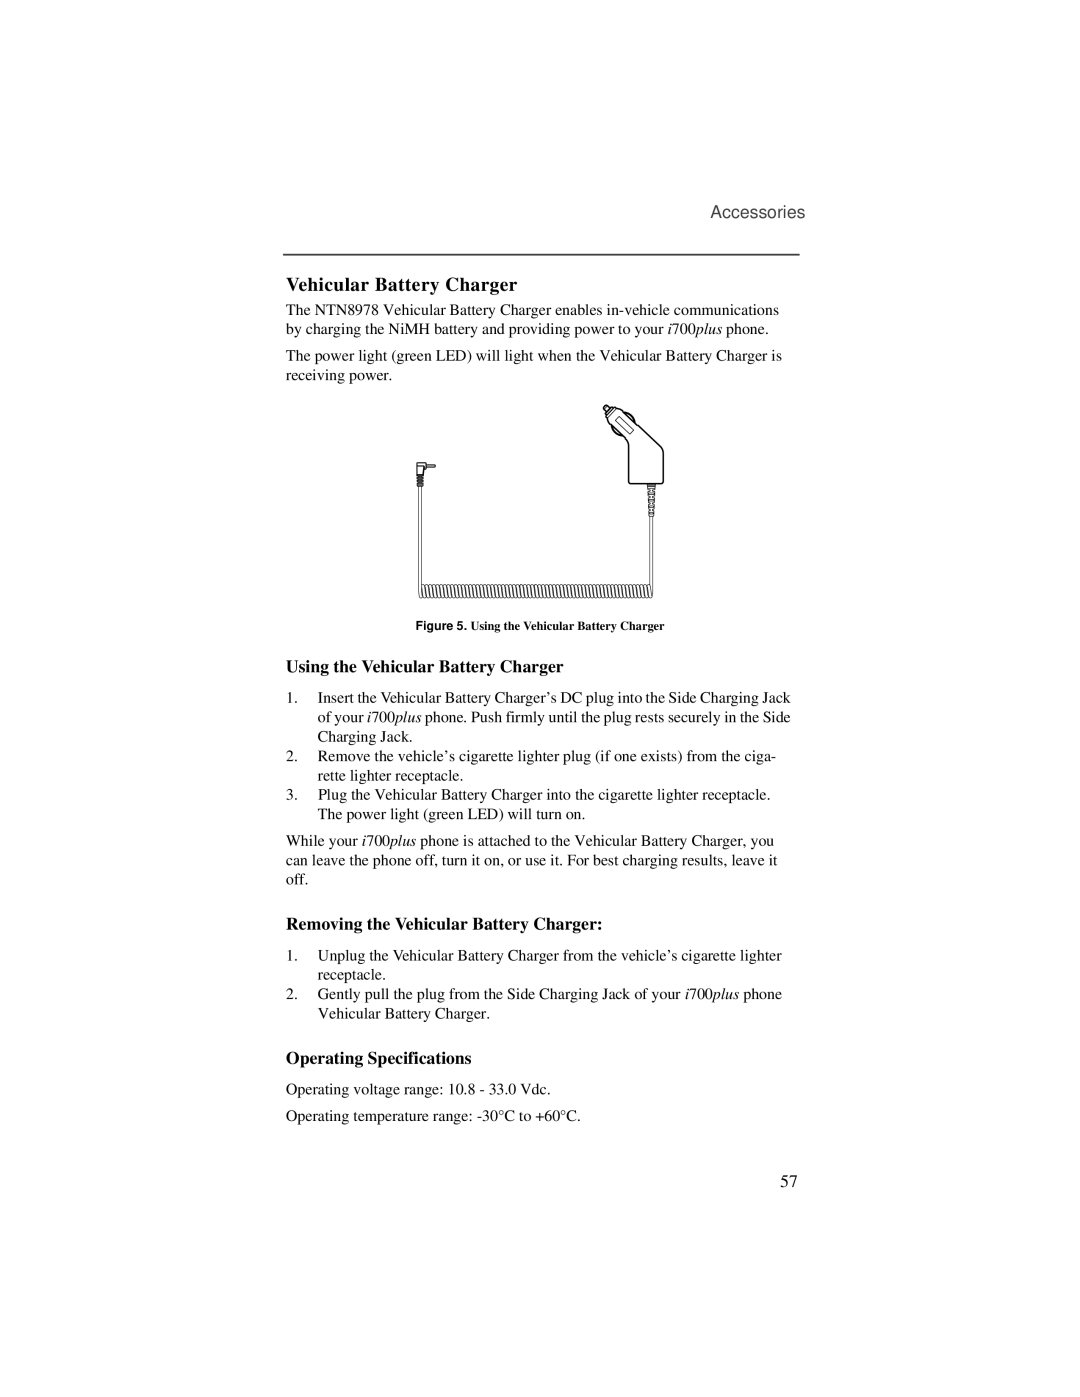 Motorola i700plus manual Using the Vehicular Battery Charger, Removing the Vehicular Battery Charger 